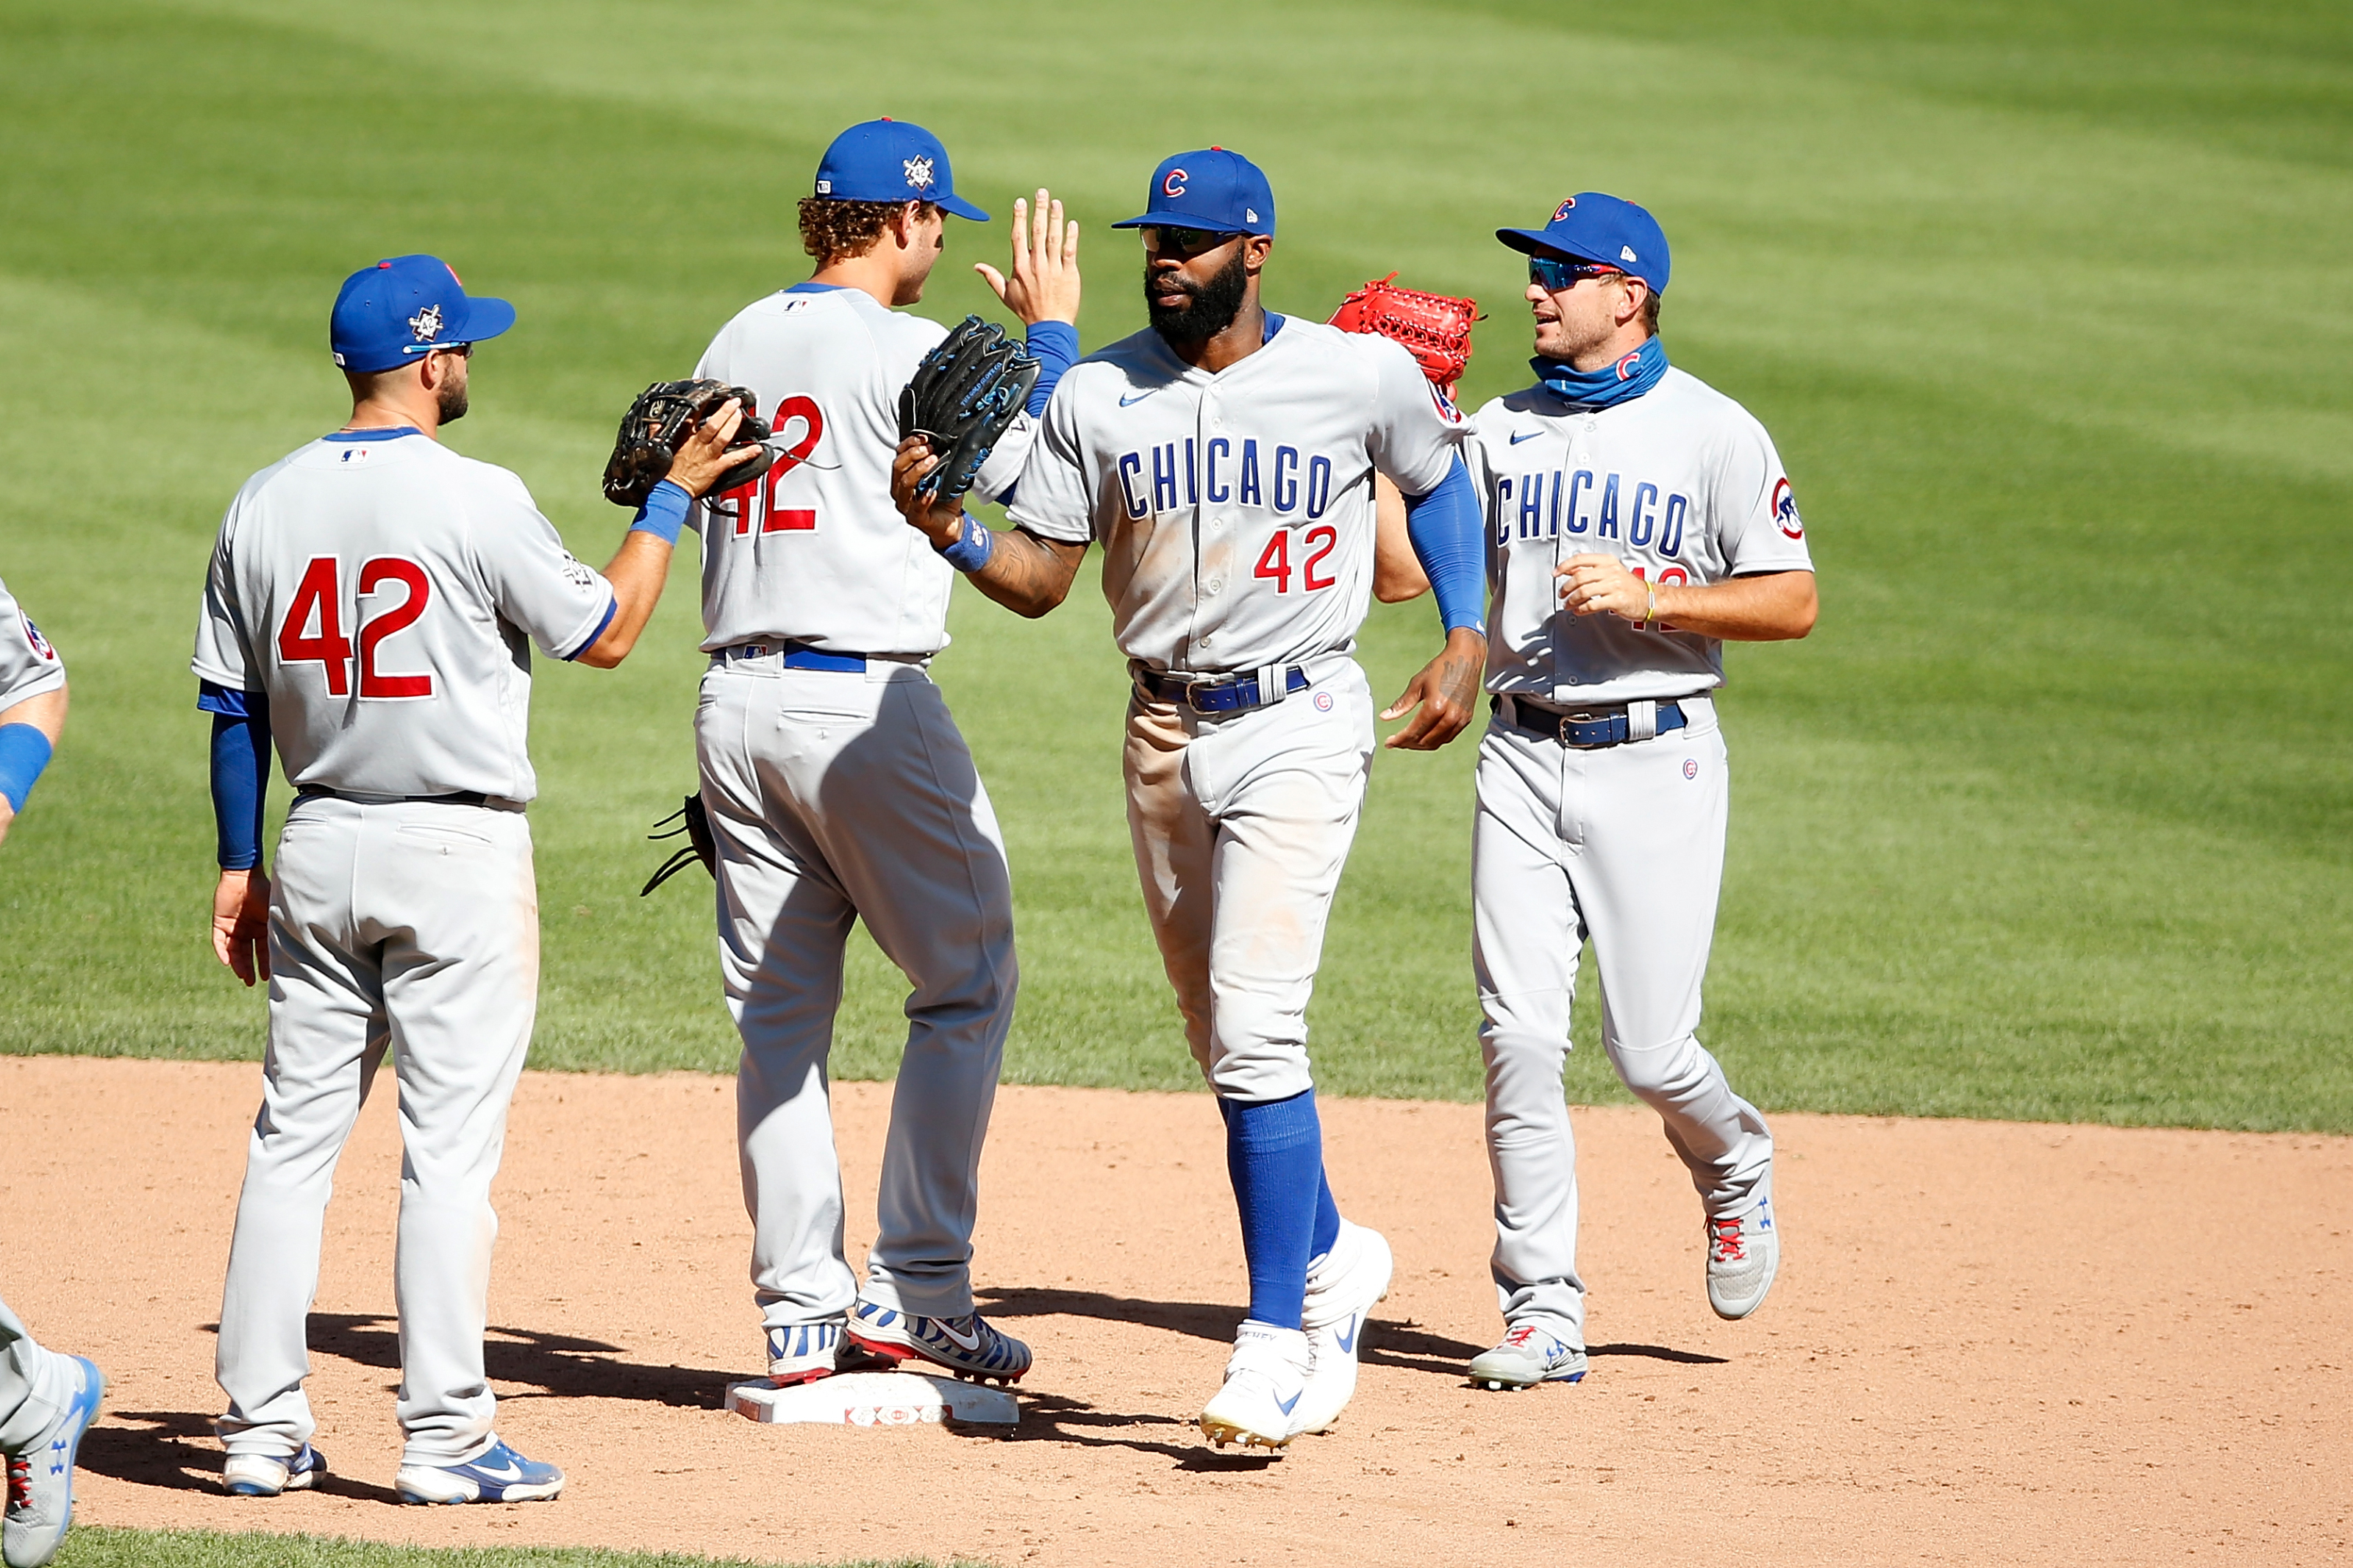 Chicago Cubs: Make Major League Baseball history on Sunday